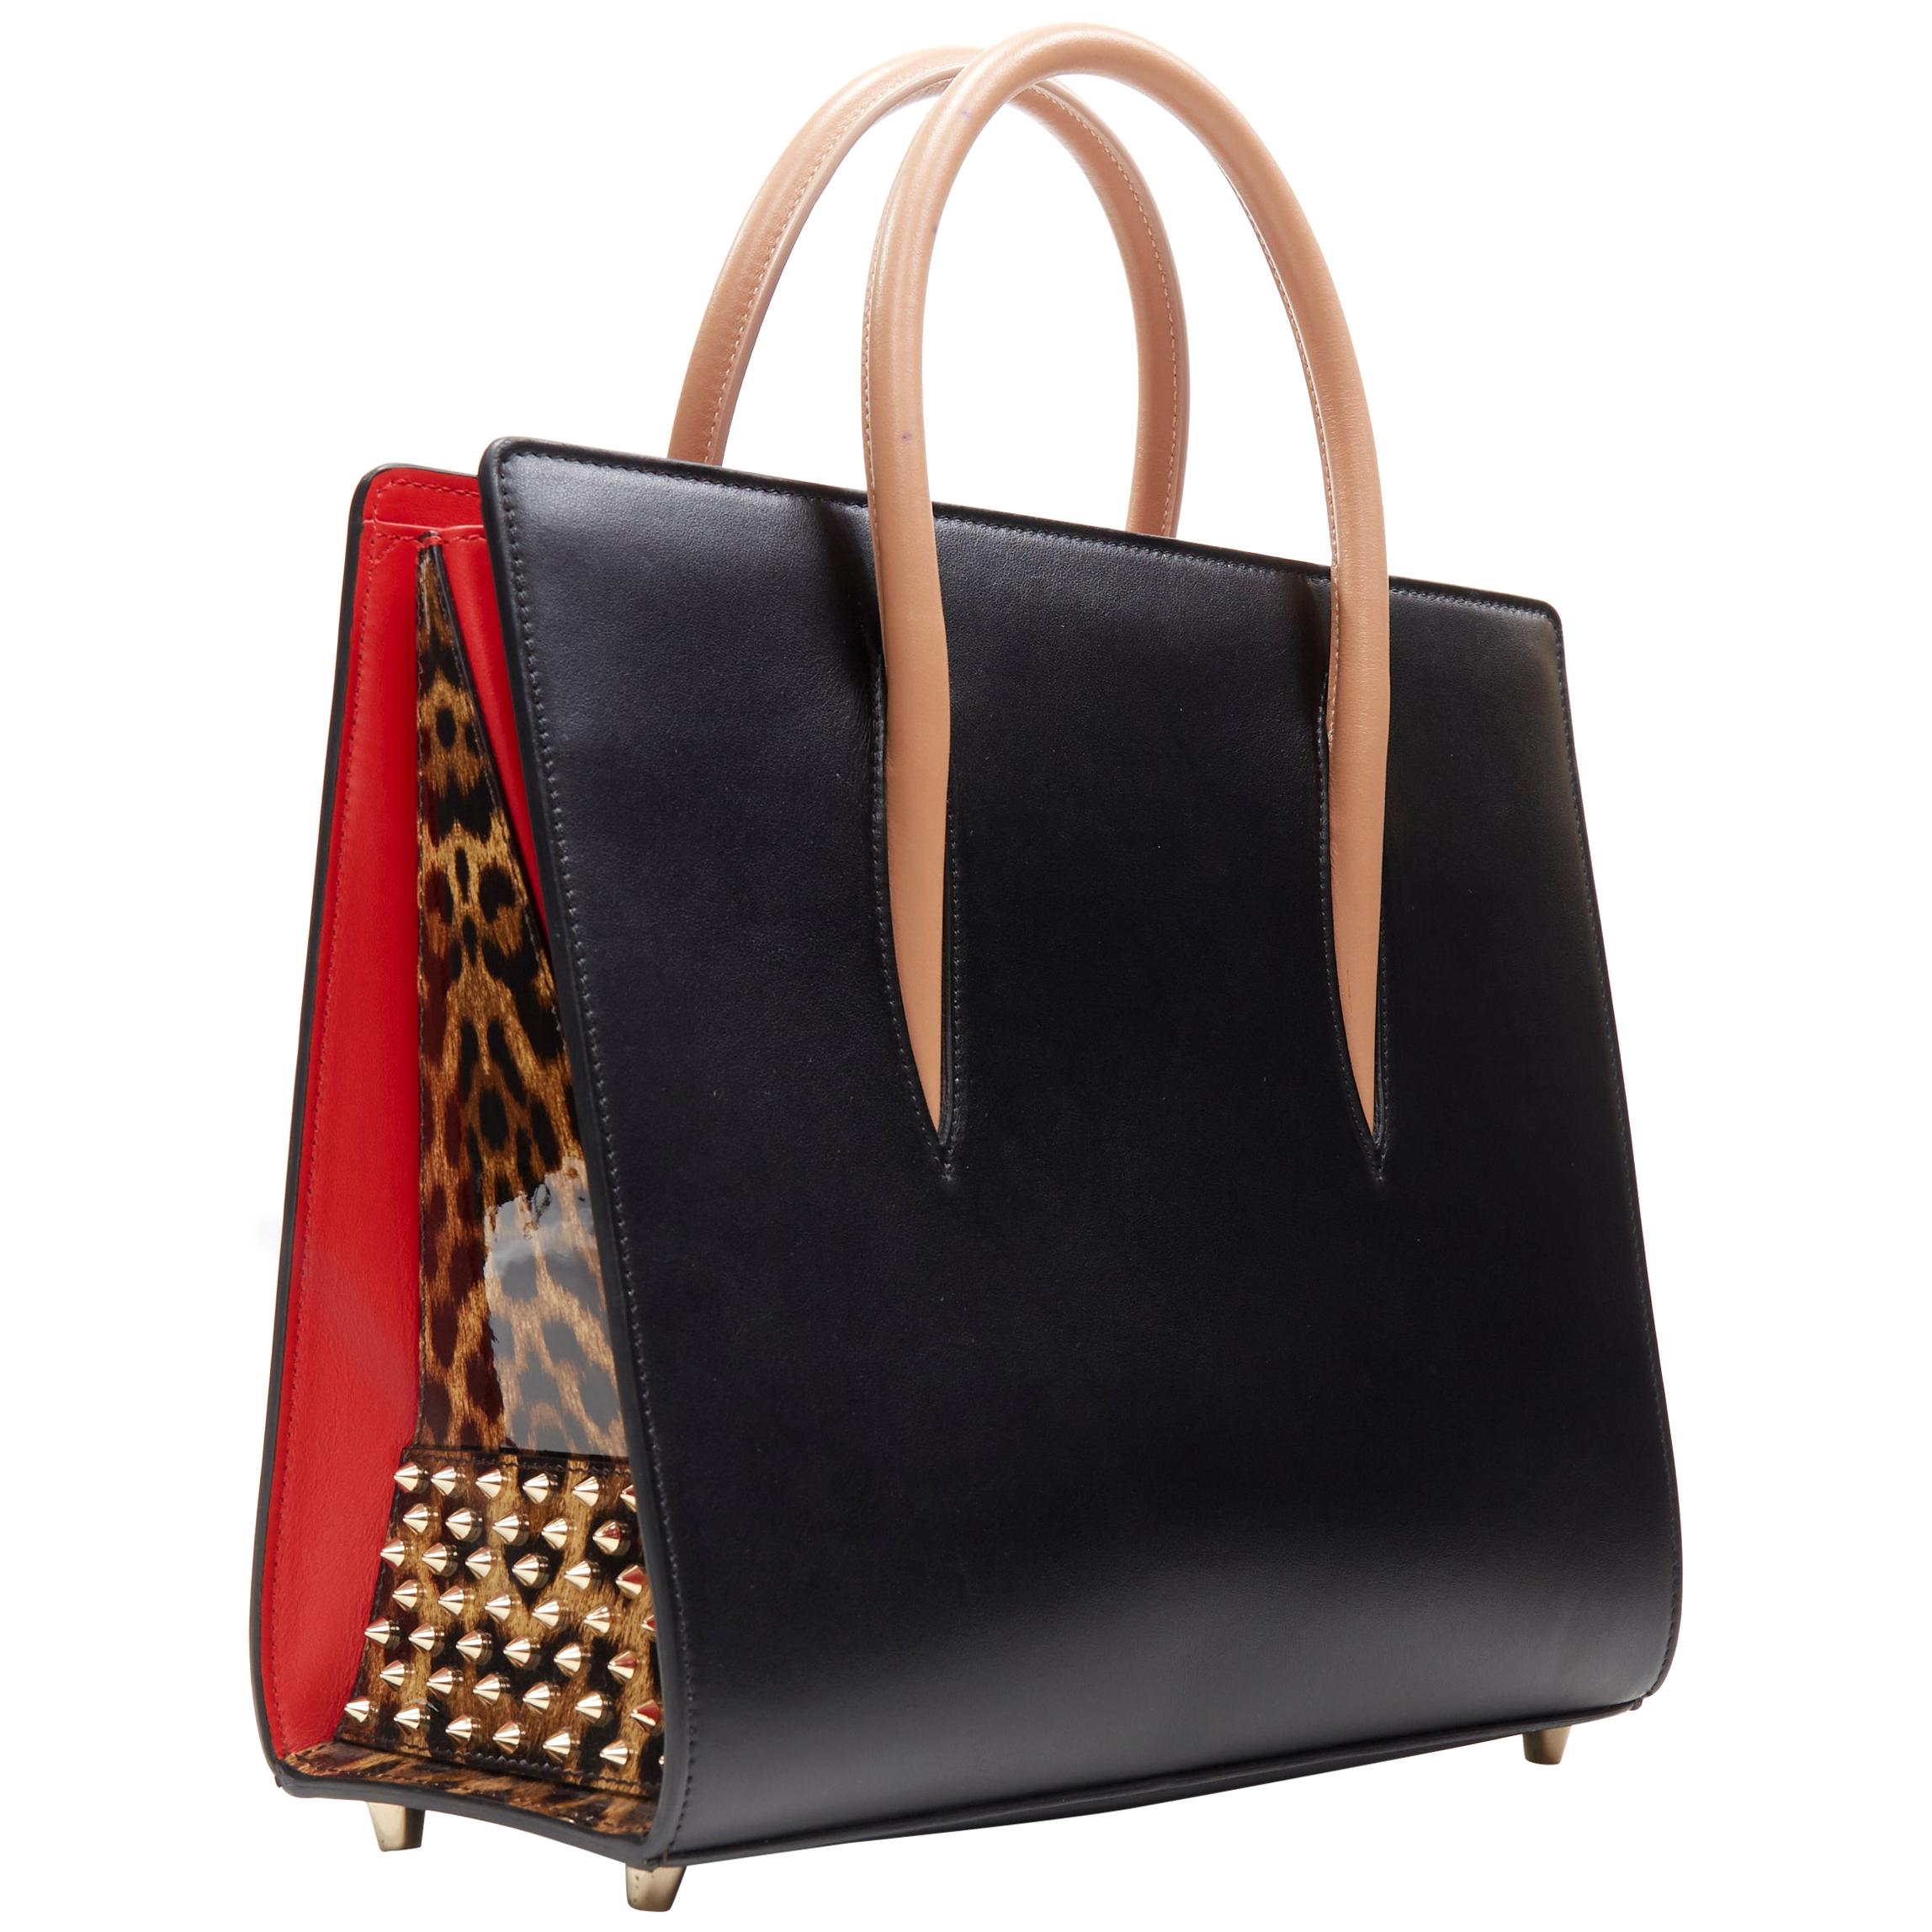 CHRISTIAN LOUBOUTIN Paloma black leopard patent studded medium satchel bag